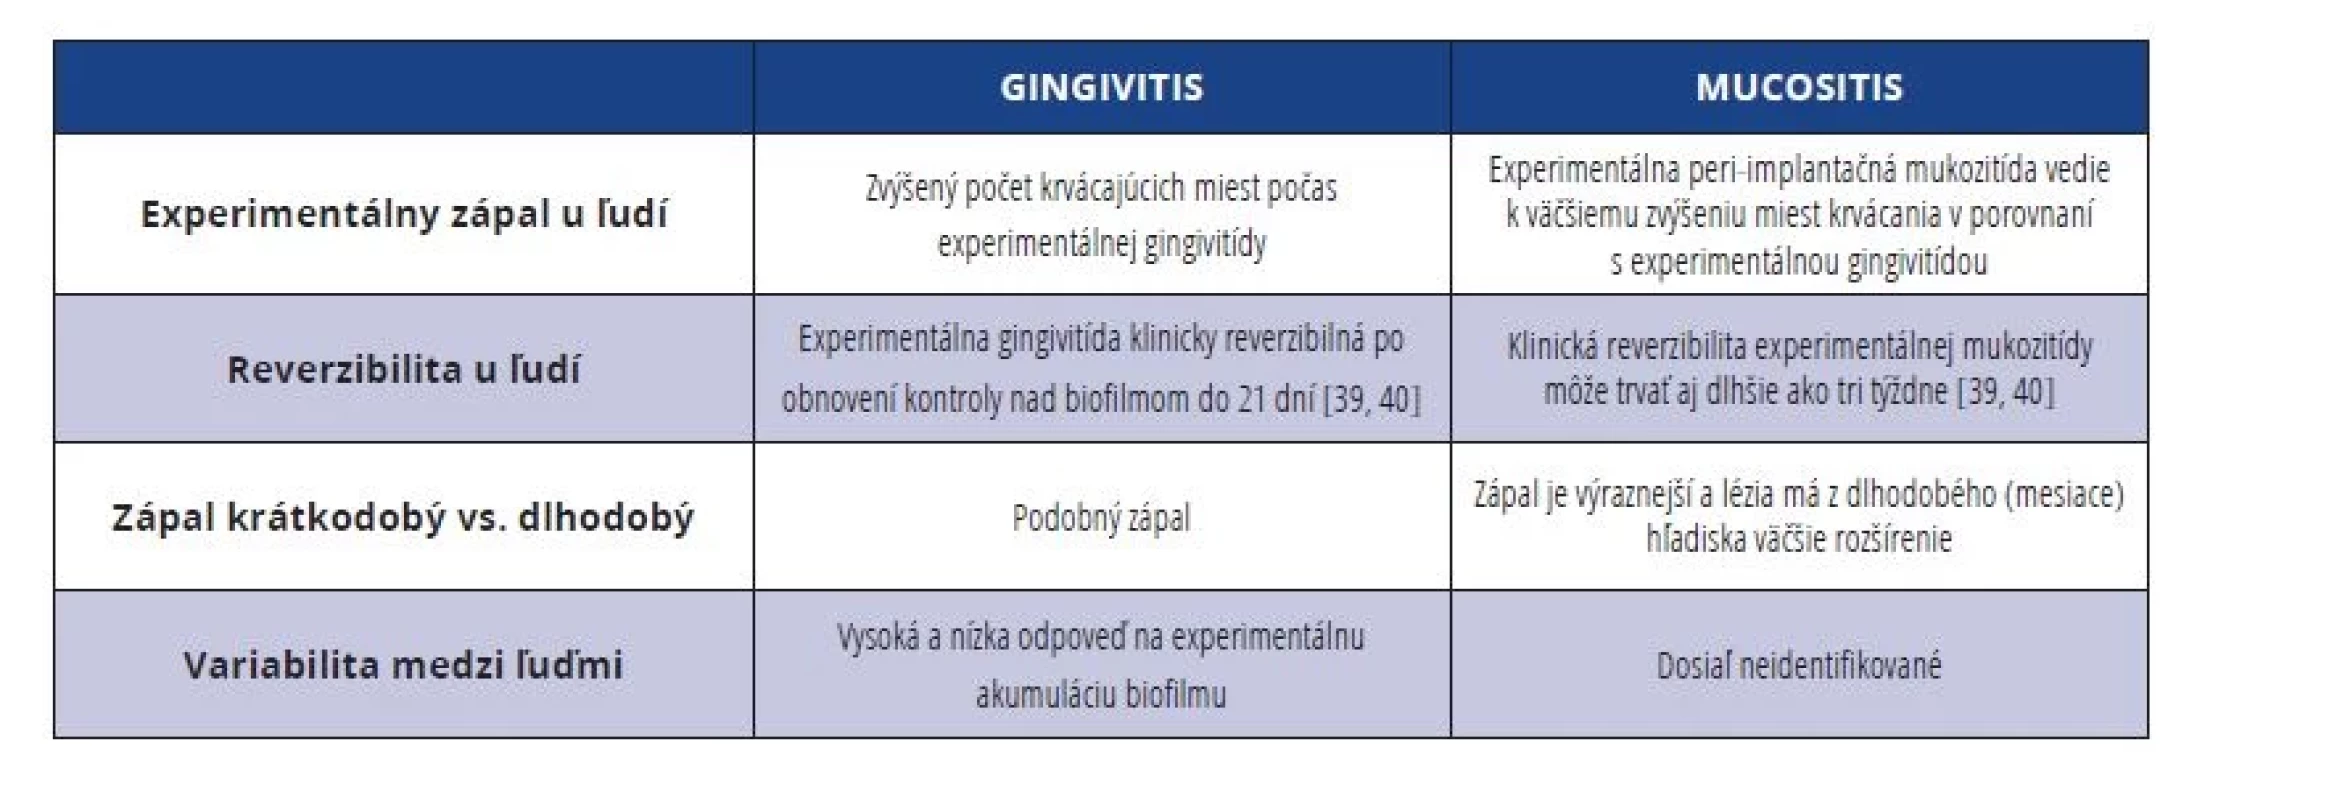 Rozdiely medzi gingivitídou a peri-implantátovou mukozitídou.<br>
Tab. 3 Differences between gingivitis and peri-implant mucositis.